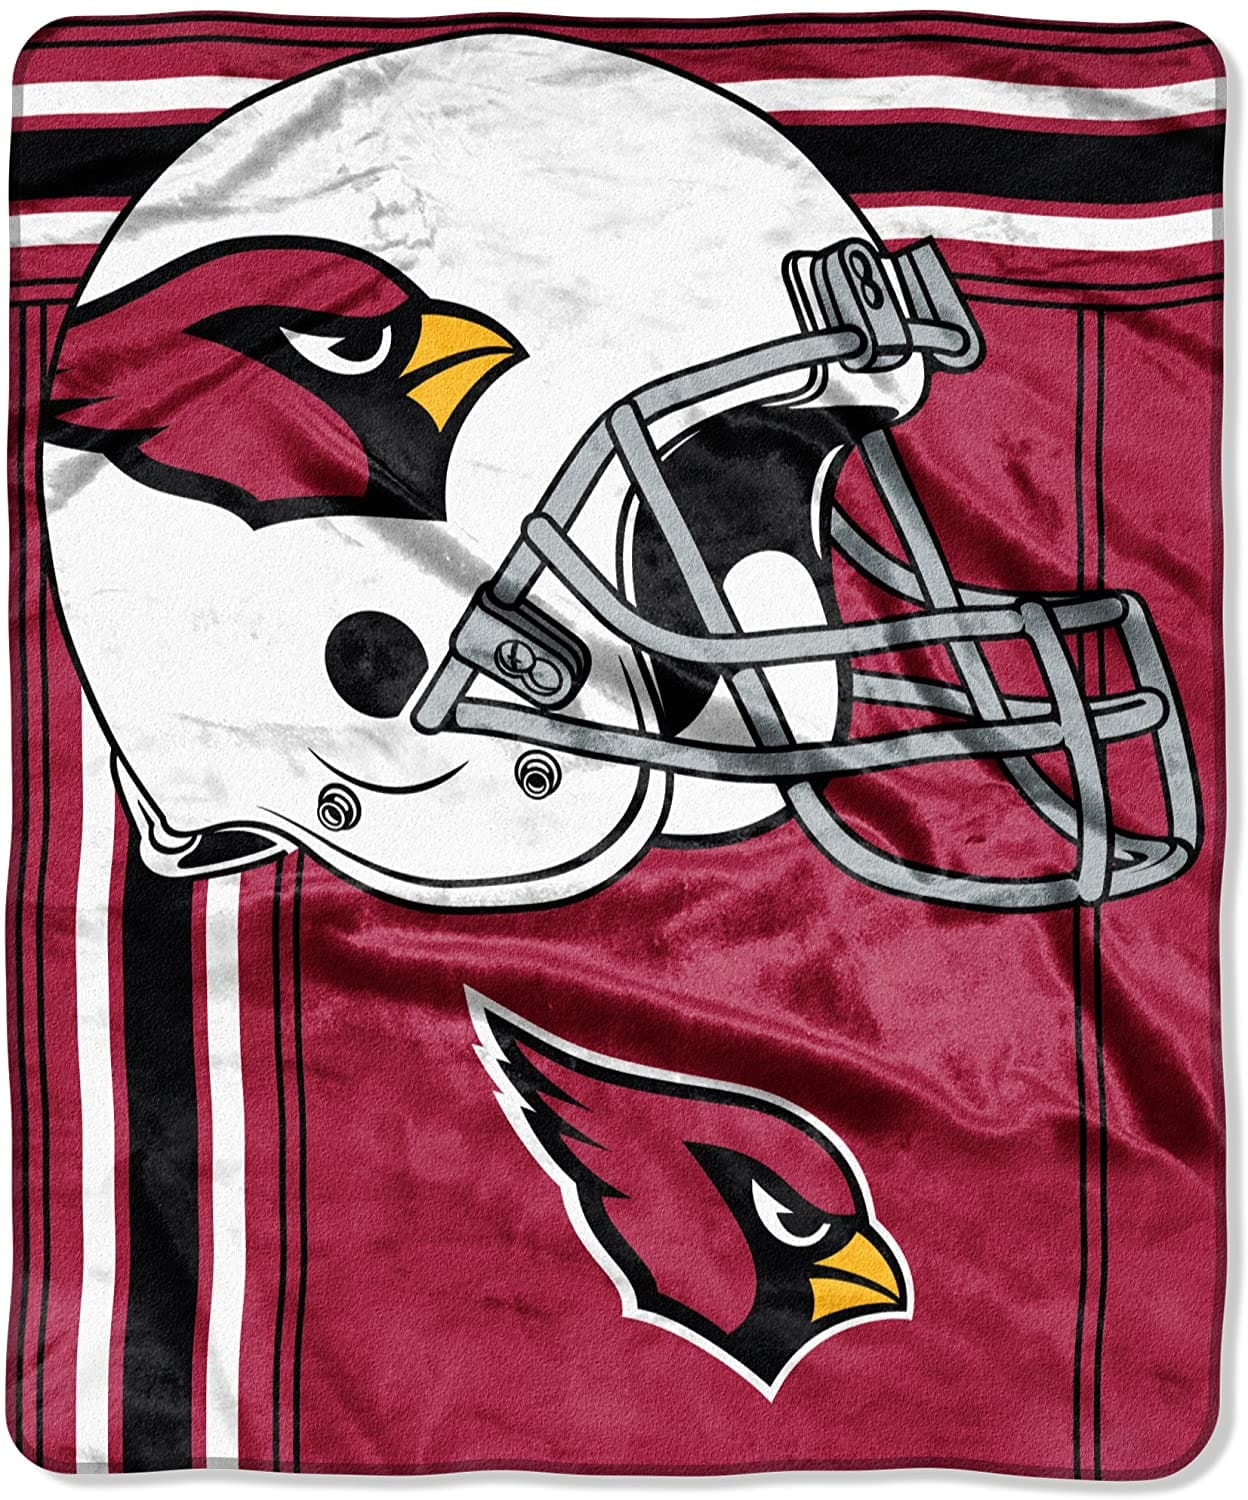 Officially Licensed Nfl Throw Arizona Cardinals Fleece Blanket